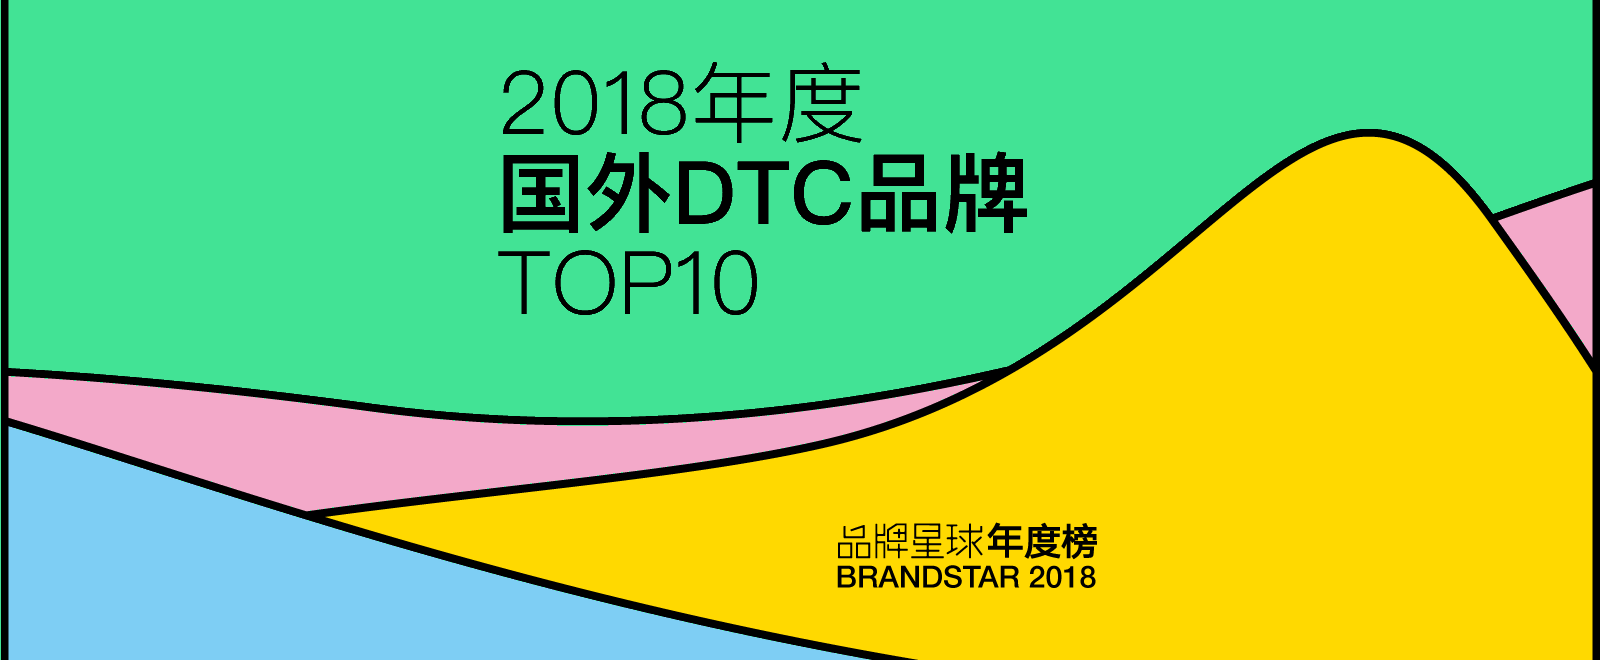 国外 DTC 品牌 TOP 10 | 品牌星球BrandStar 2018 年度榜单